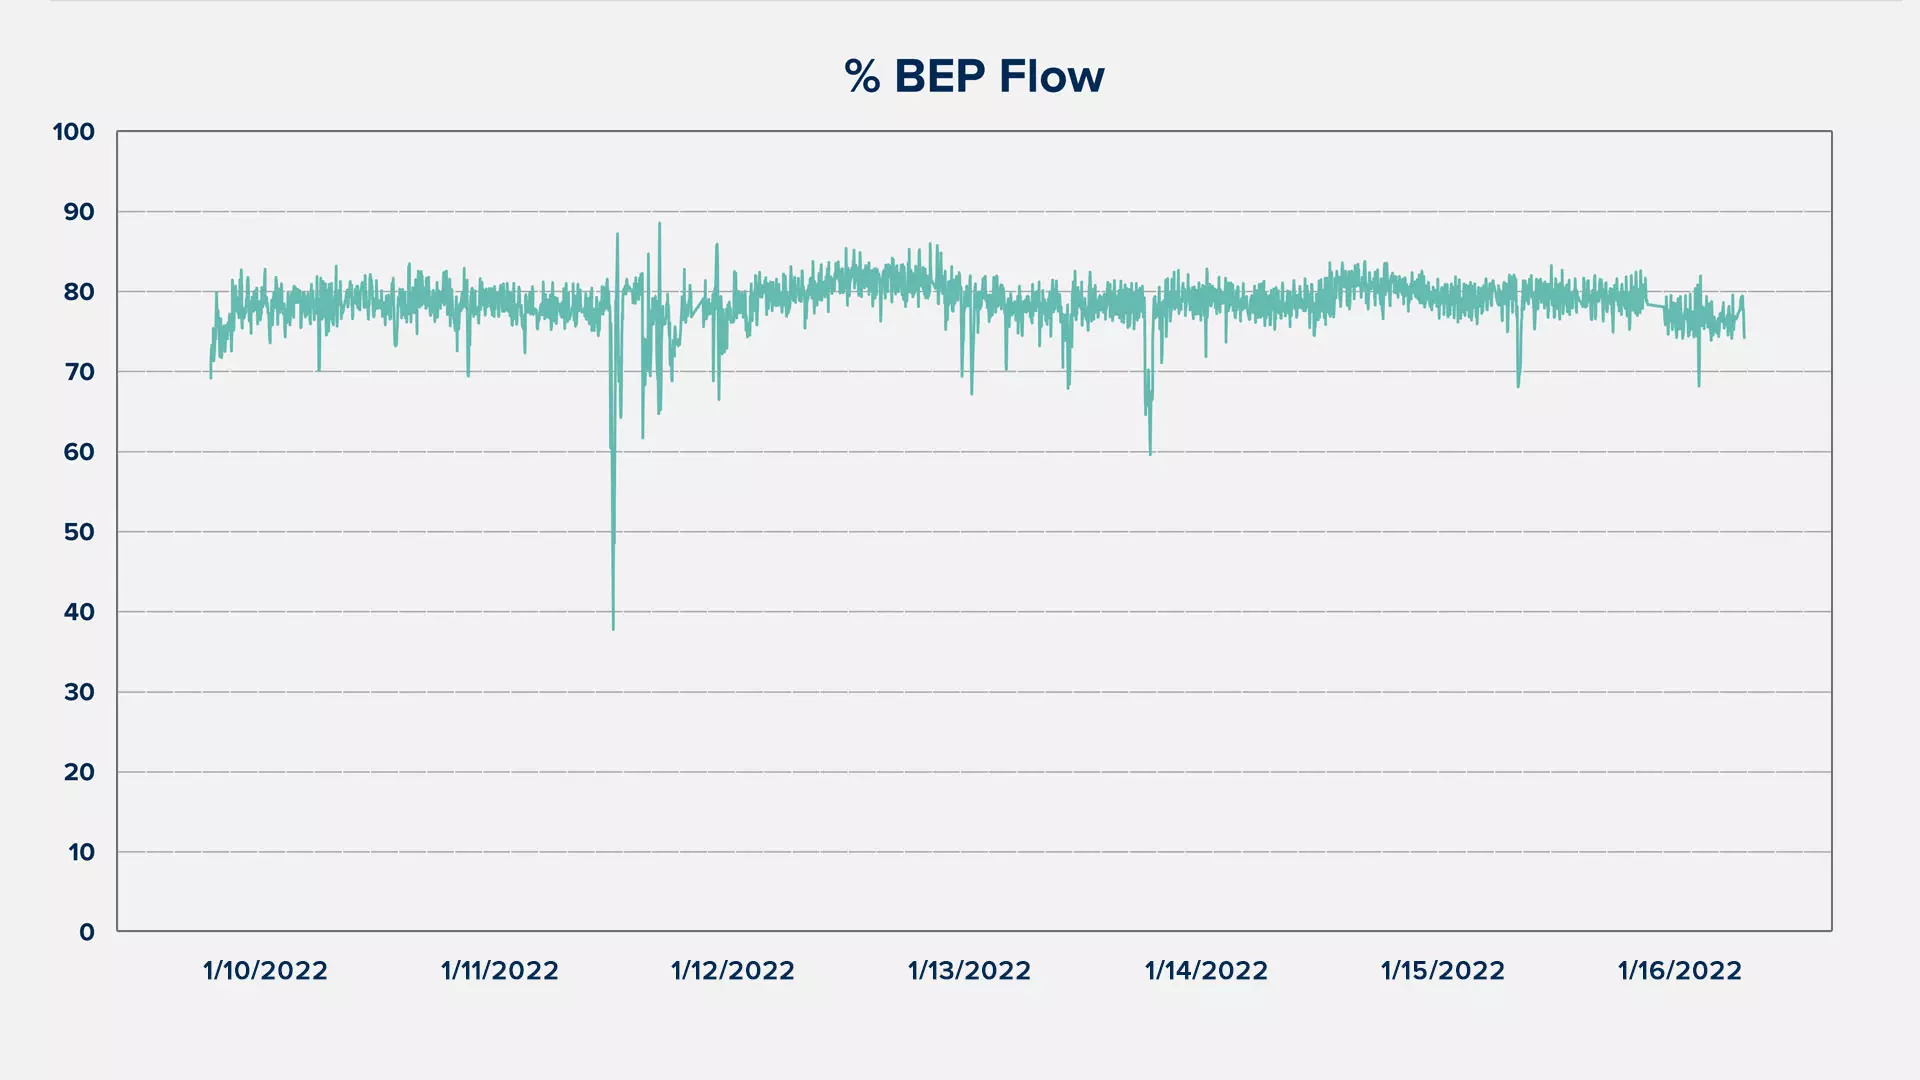 KREBS smart slurry pump with siteconnect BEP results 